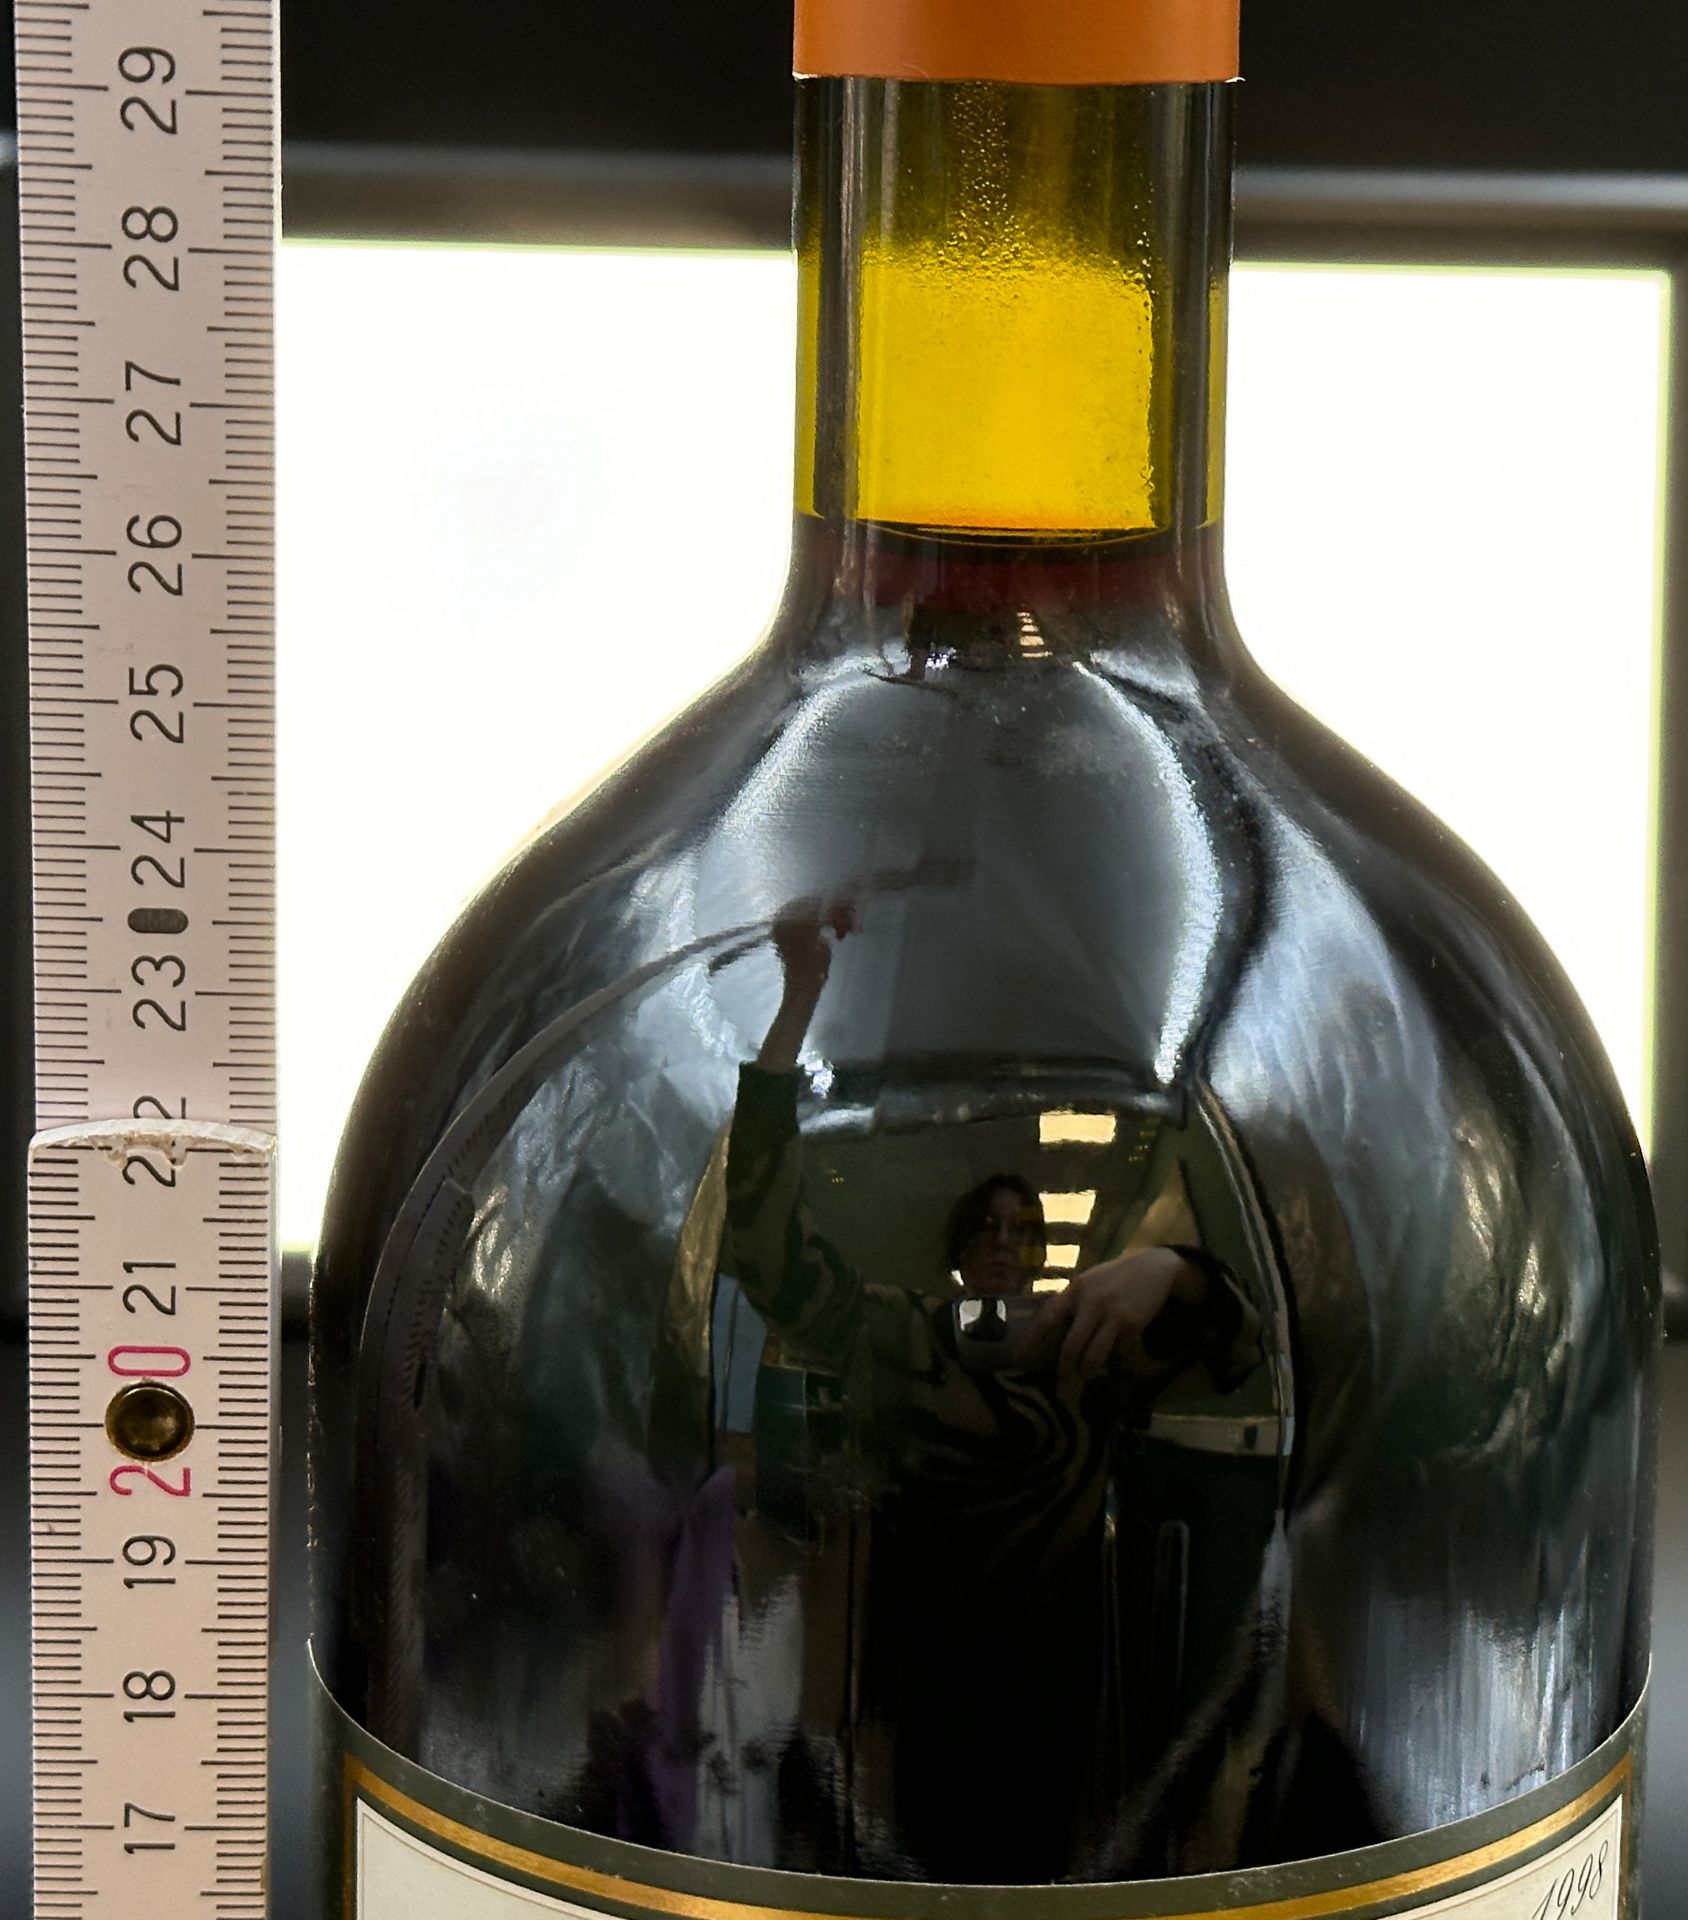 SOLAIA. Marchesi Antinori. 1 magnum bottle of red wine. 1998. - Image 10 of 11